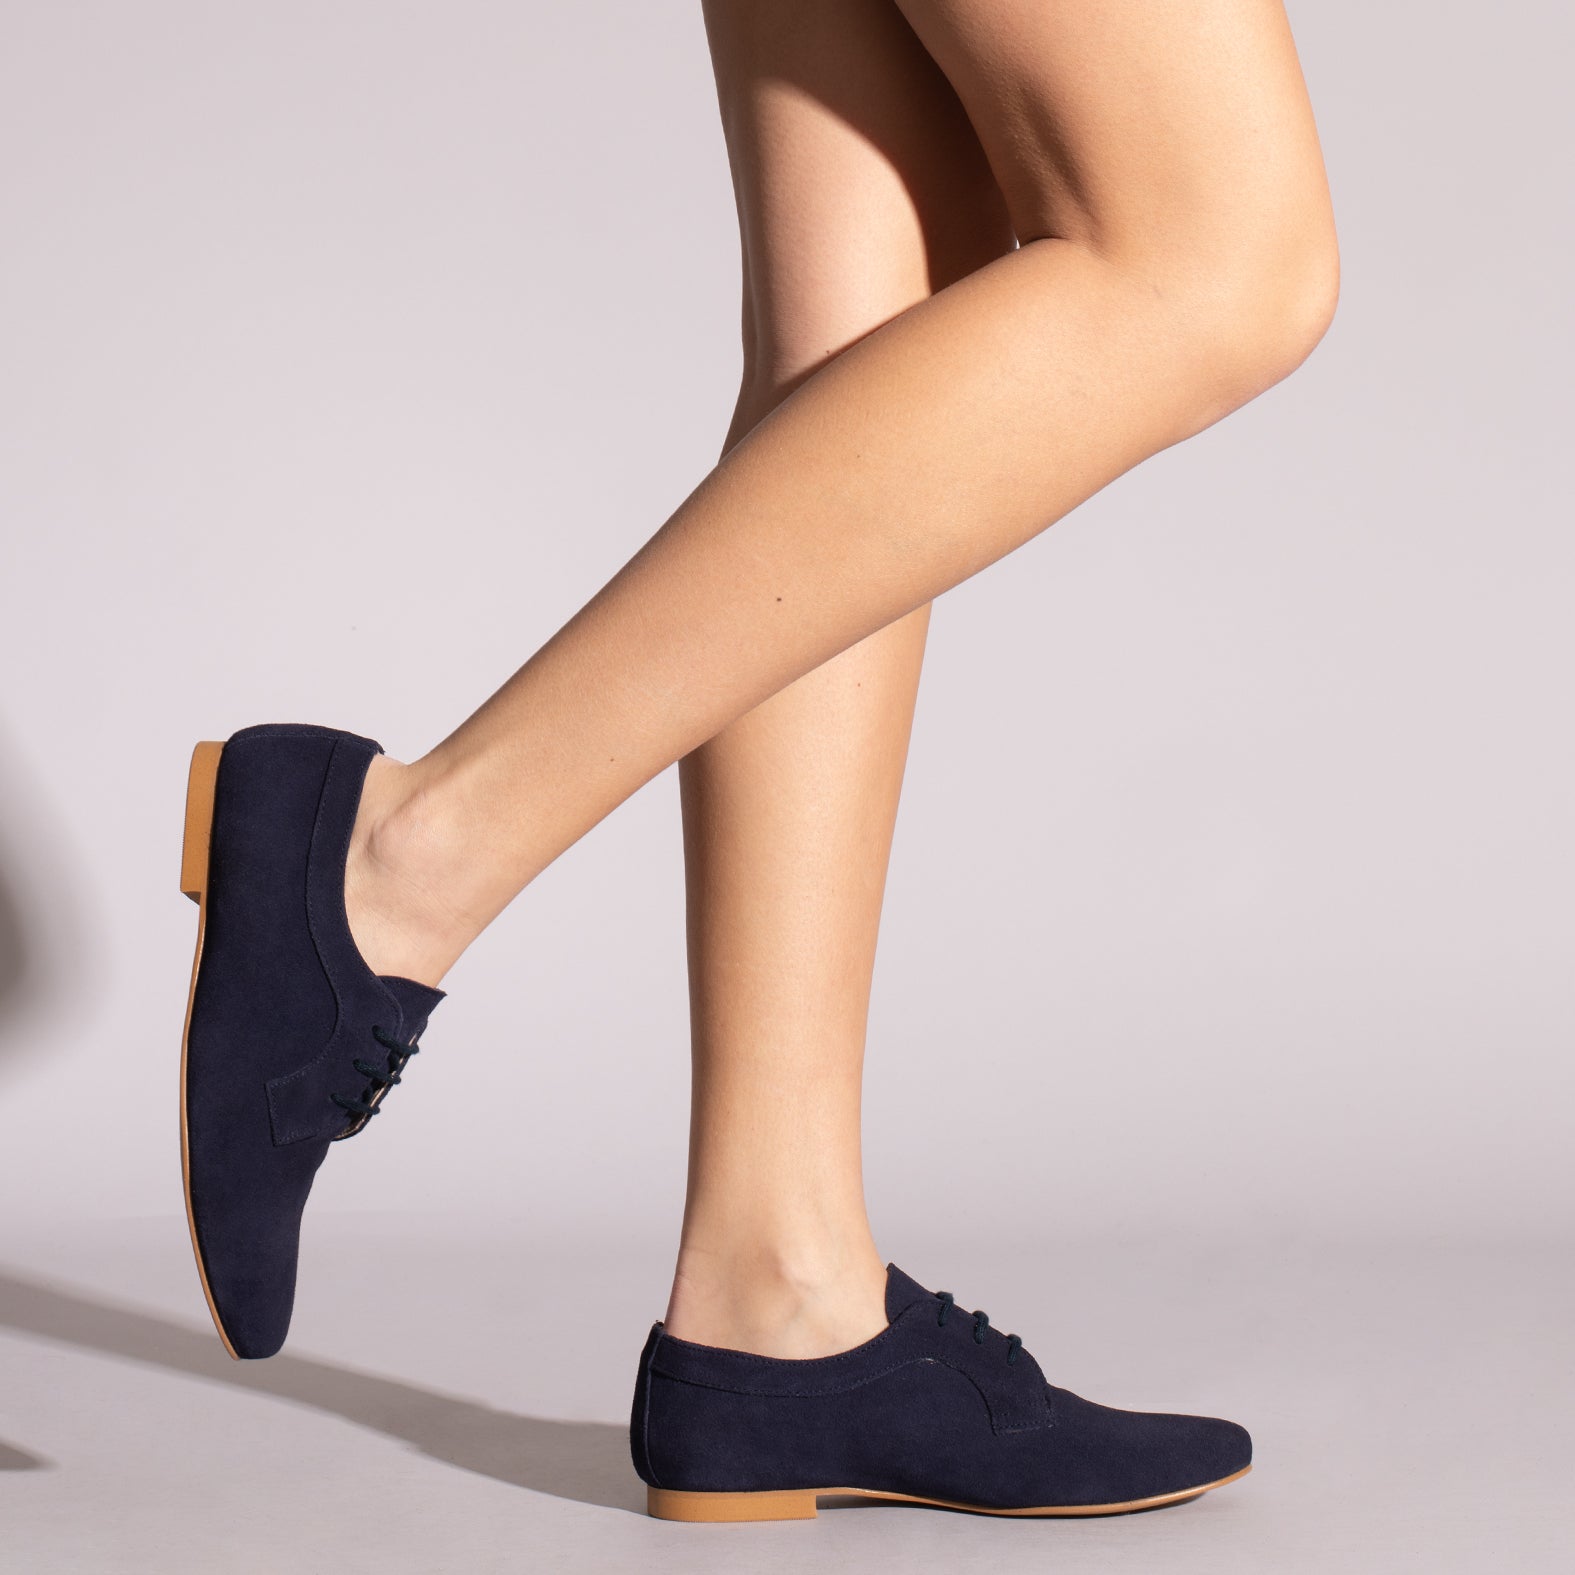 Zapatos Cordones Mujer Piel Azul Marino - PERA LIMONERA